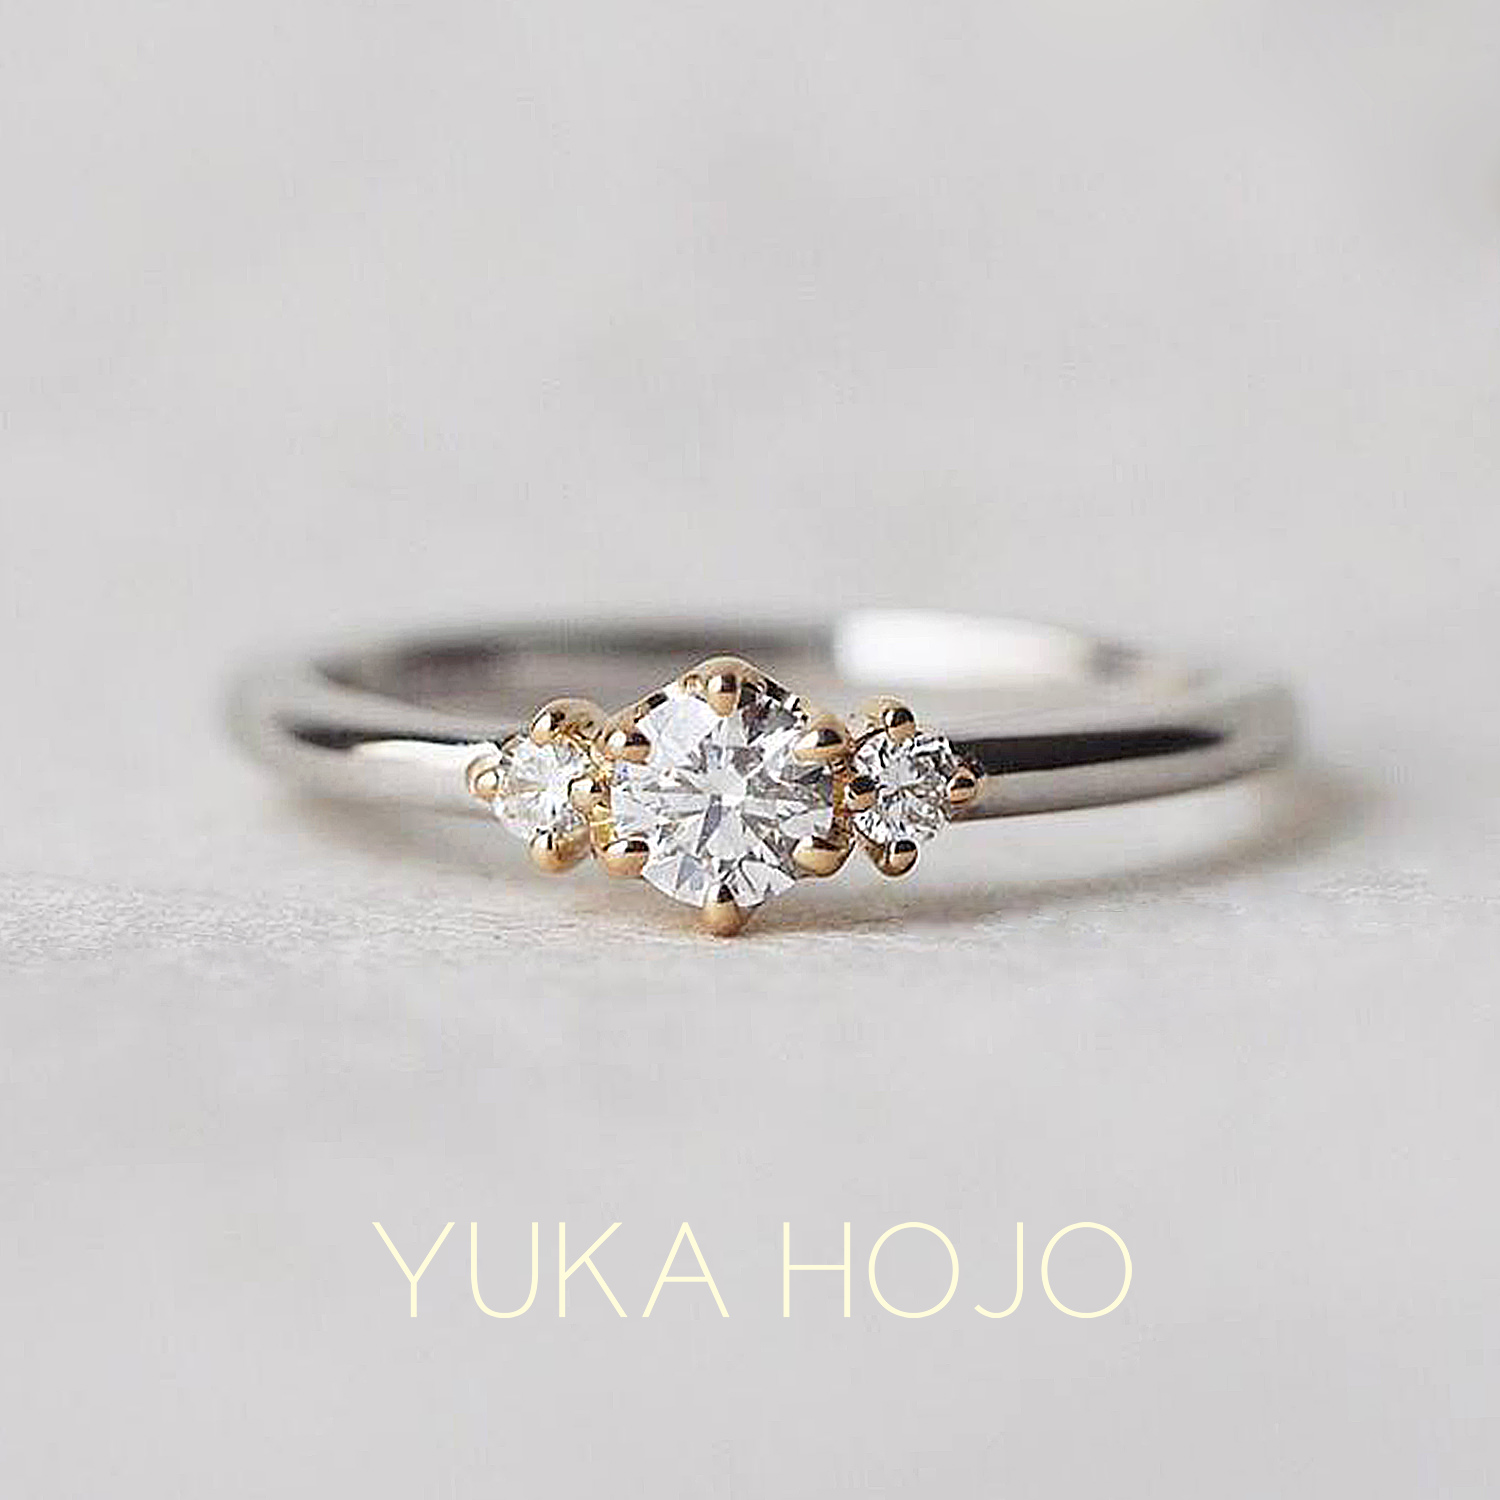 YUKA HOJOユカホウジョウの婚約指輪でエンゲージリングのStoryストーリー